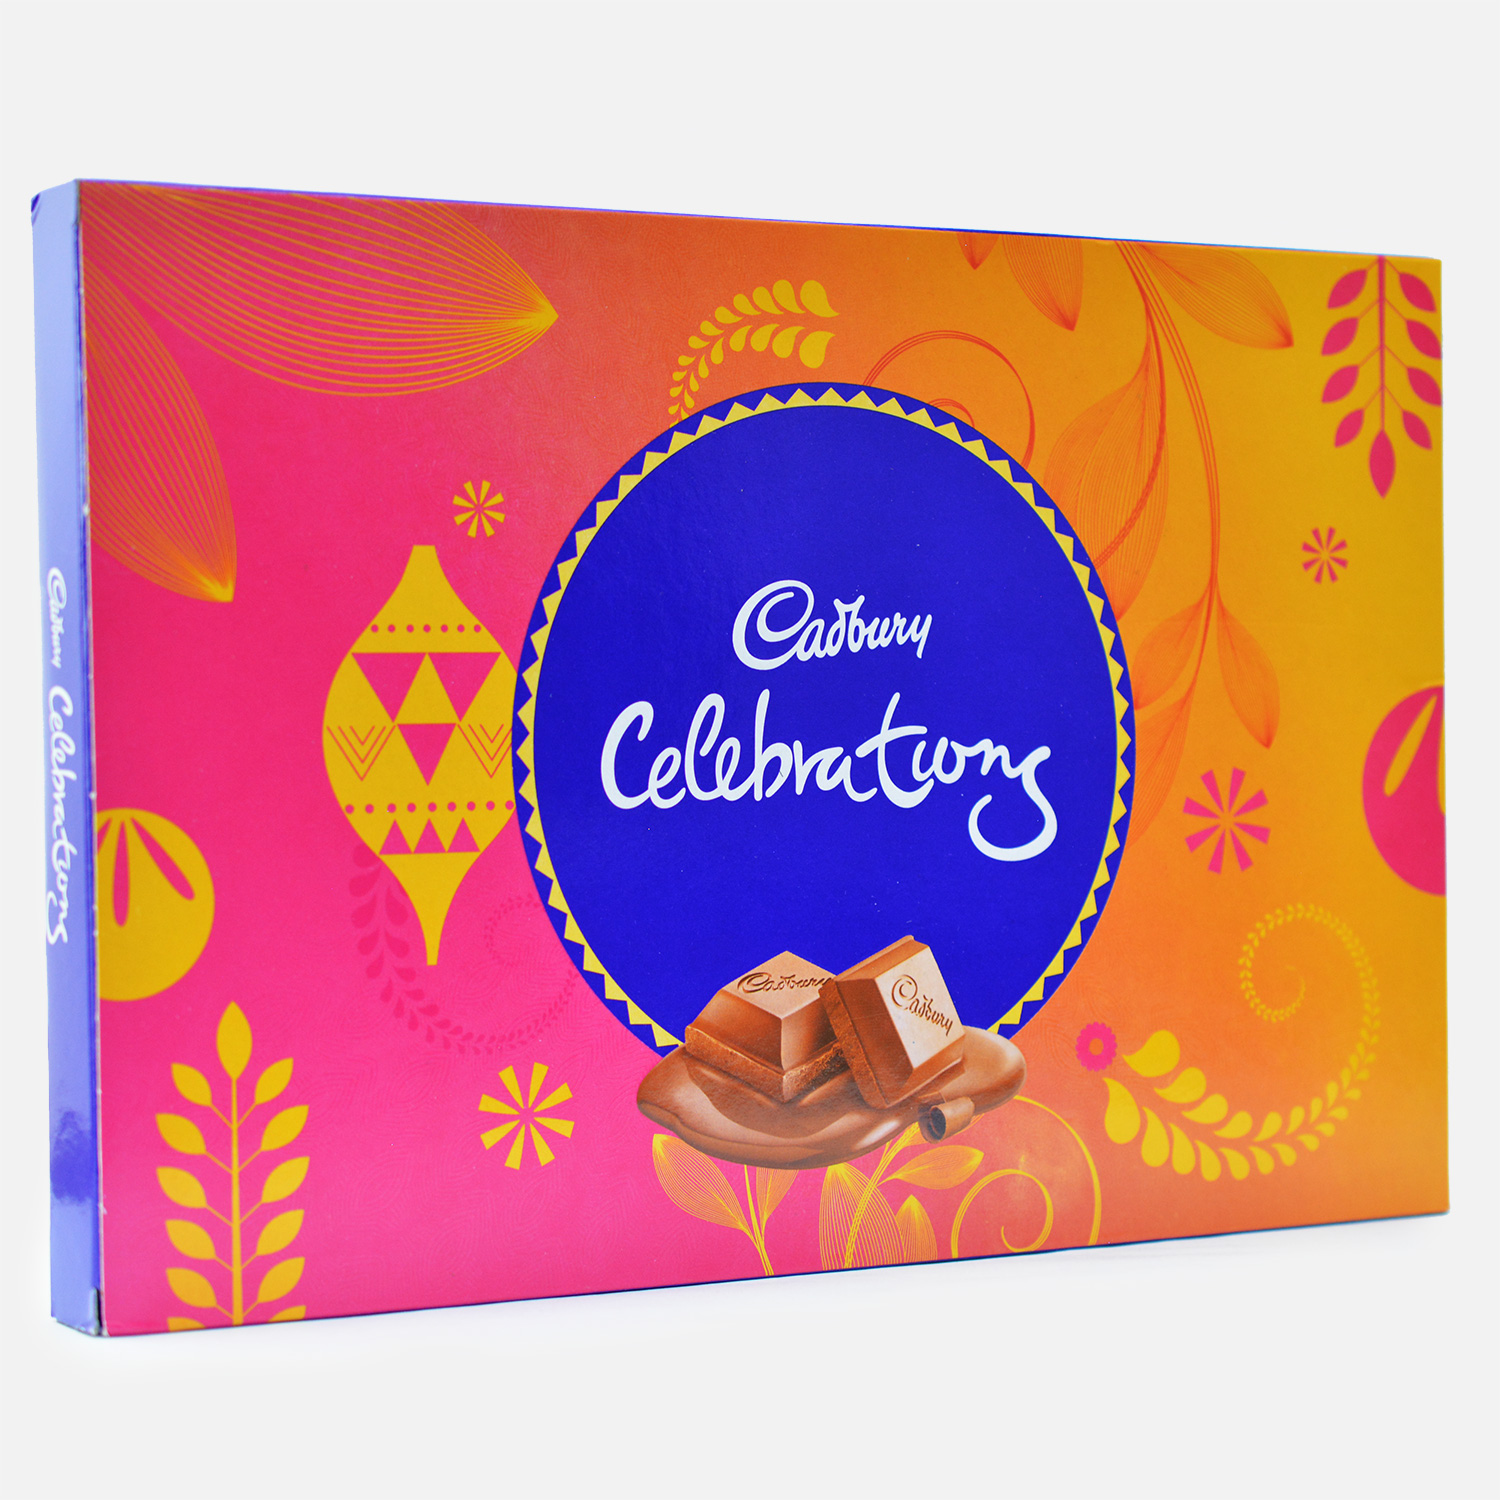 Delicious Cadbury Celebration Pack Small